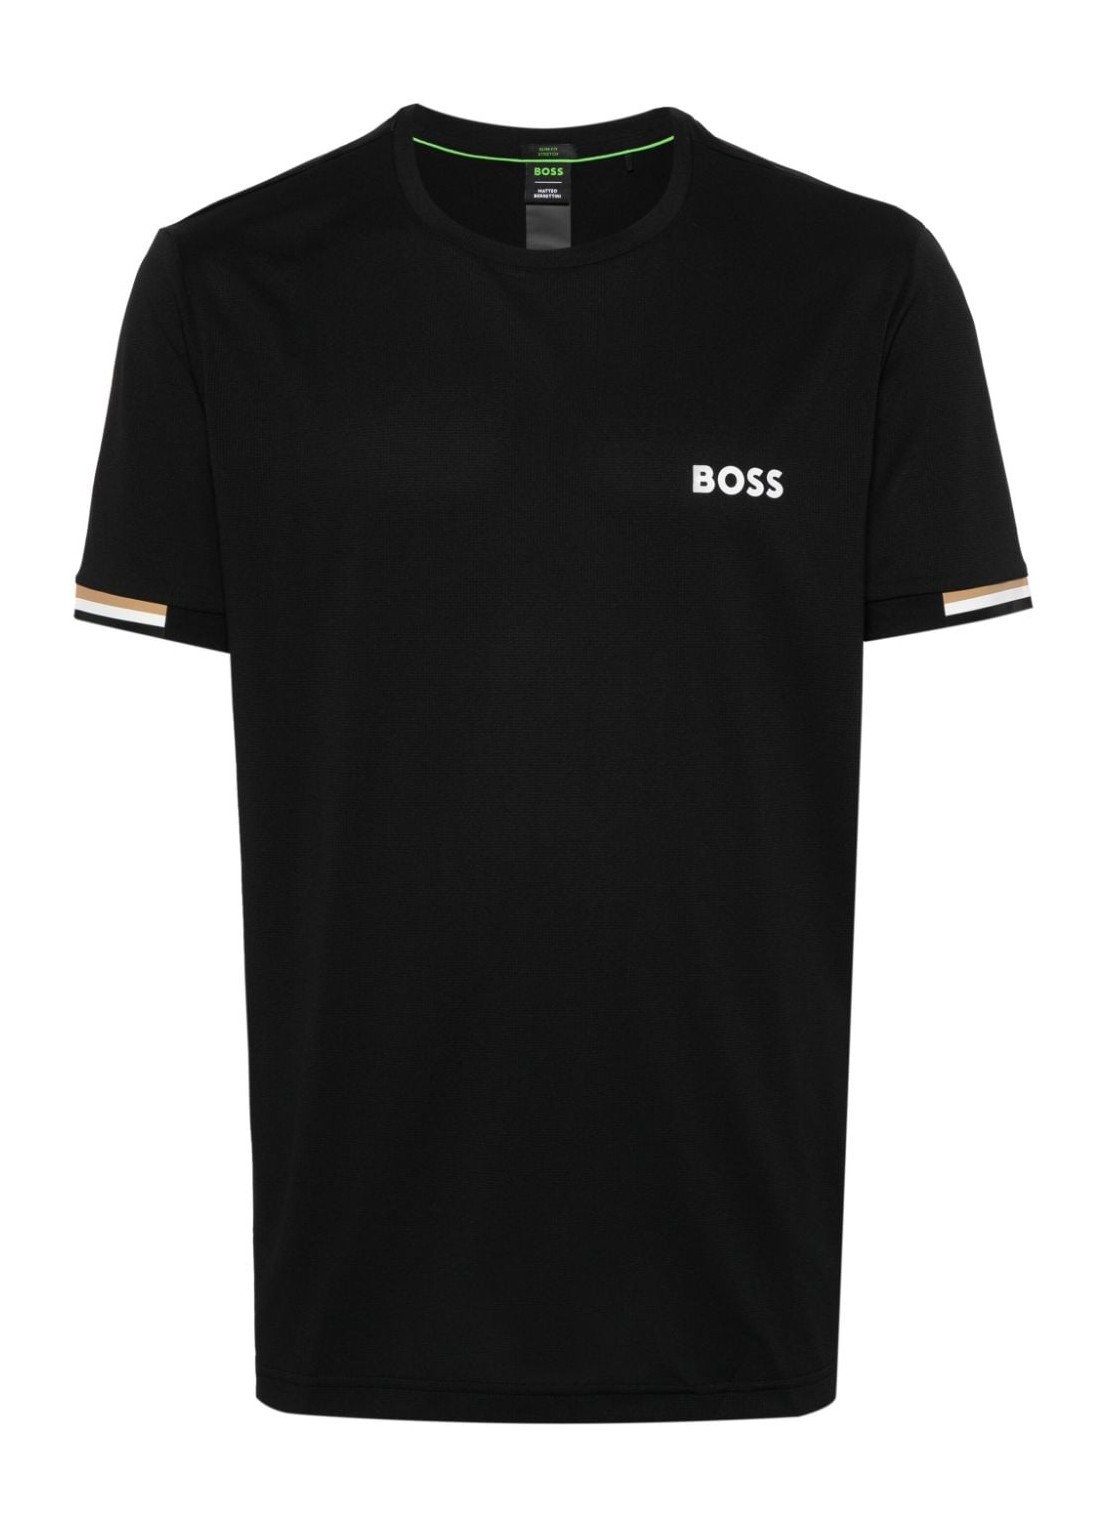 Camiseta boss t-shirt man tee mb 50506348 001 talla 3XL
 